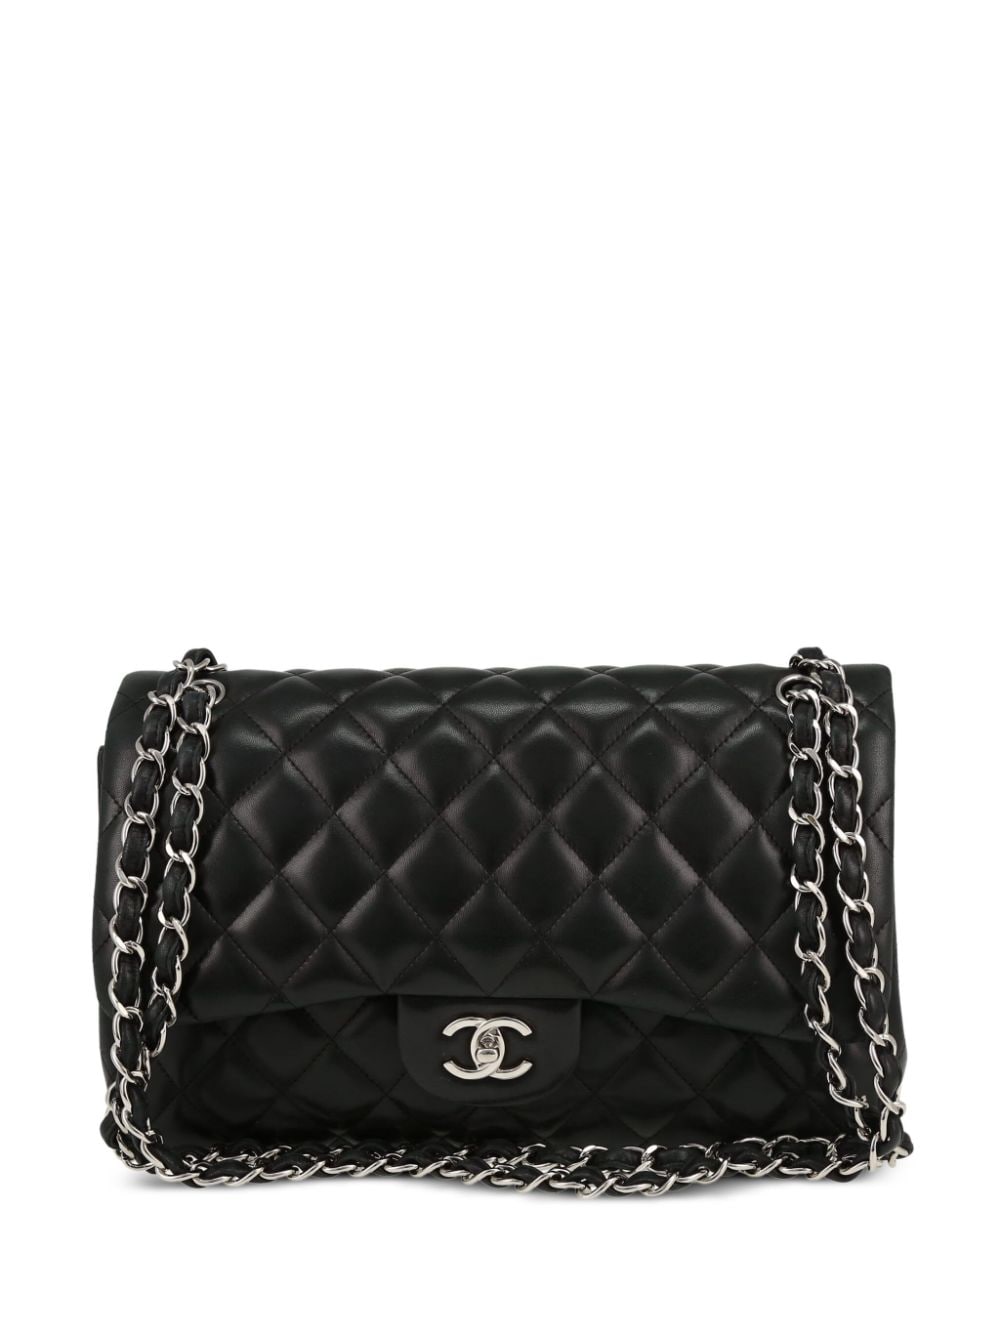 Chanel Double Flap Shoulder Bag Black